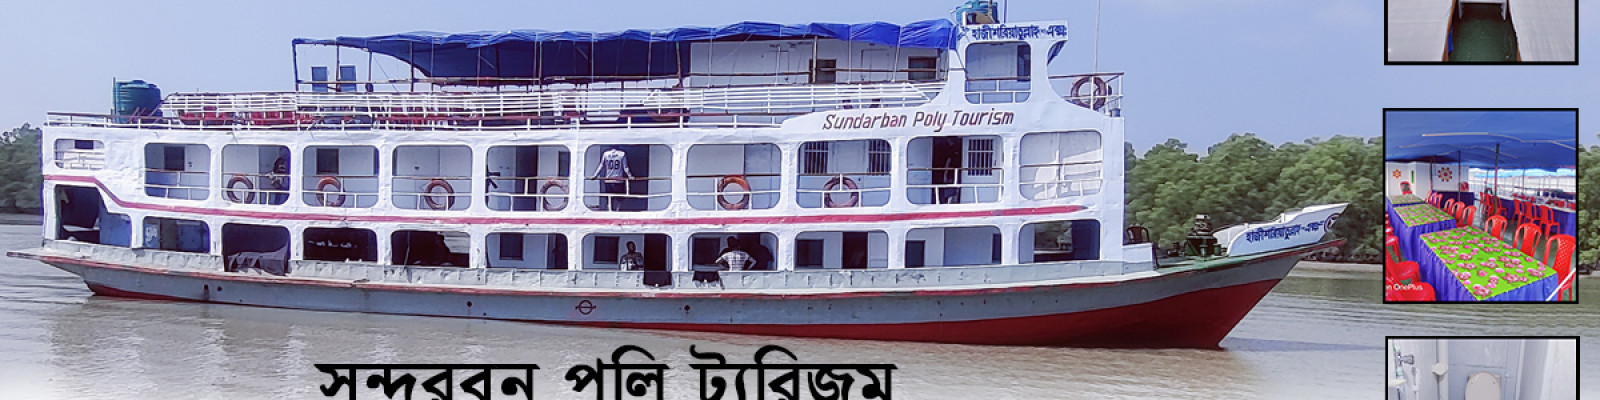 Cover image of Sundarban Poly Tourism